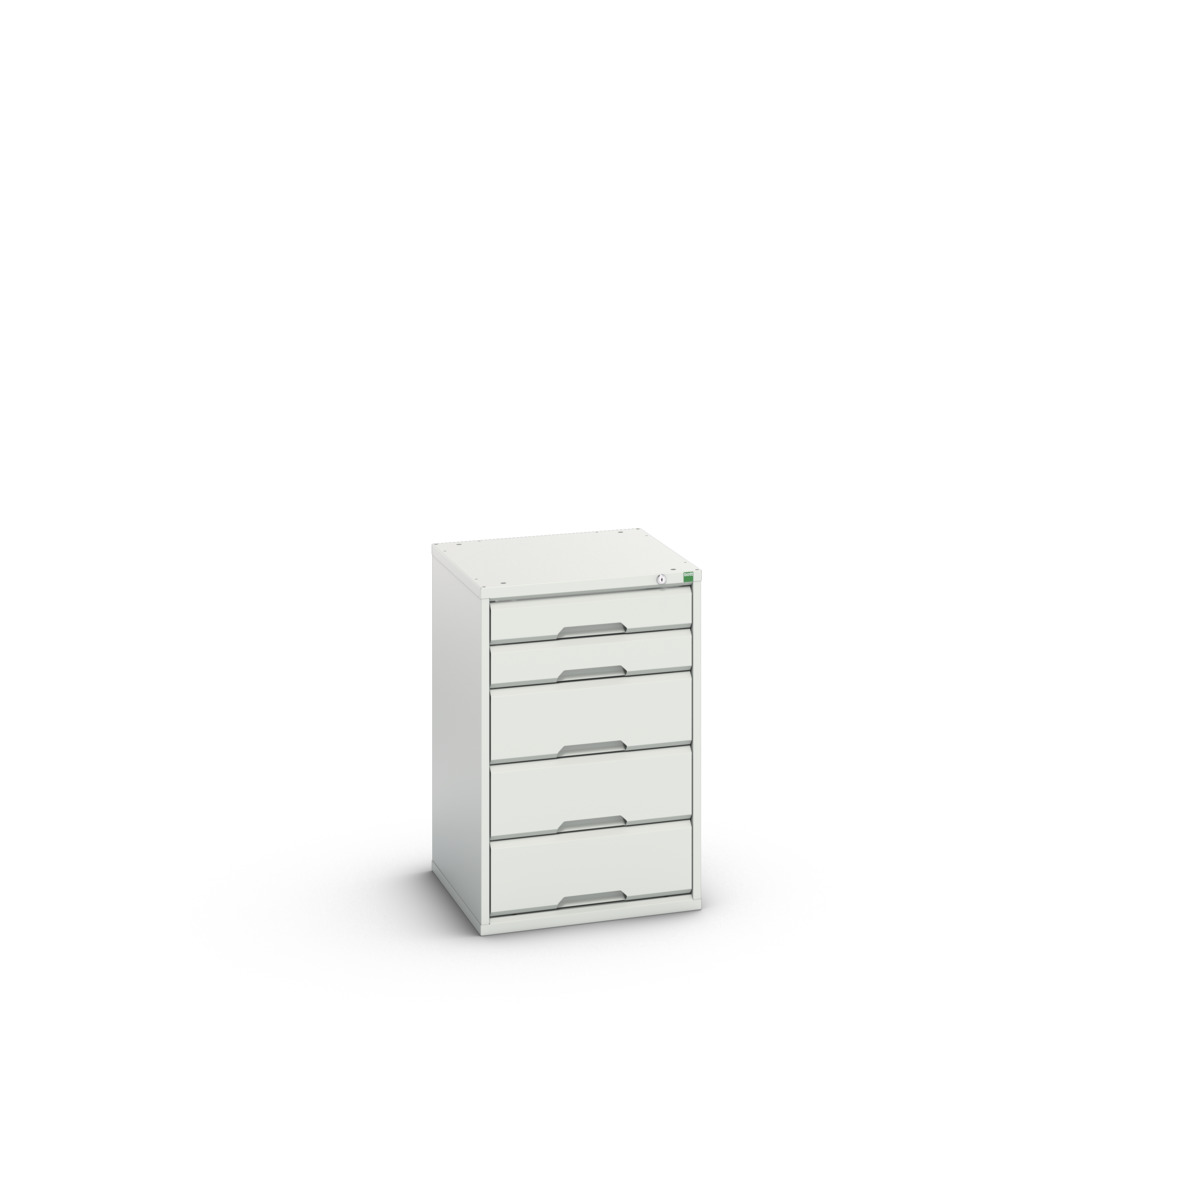 16925012.16 - verso drawer cabinet